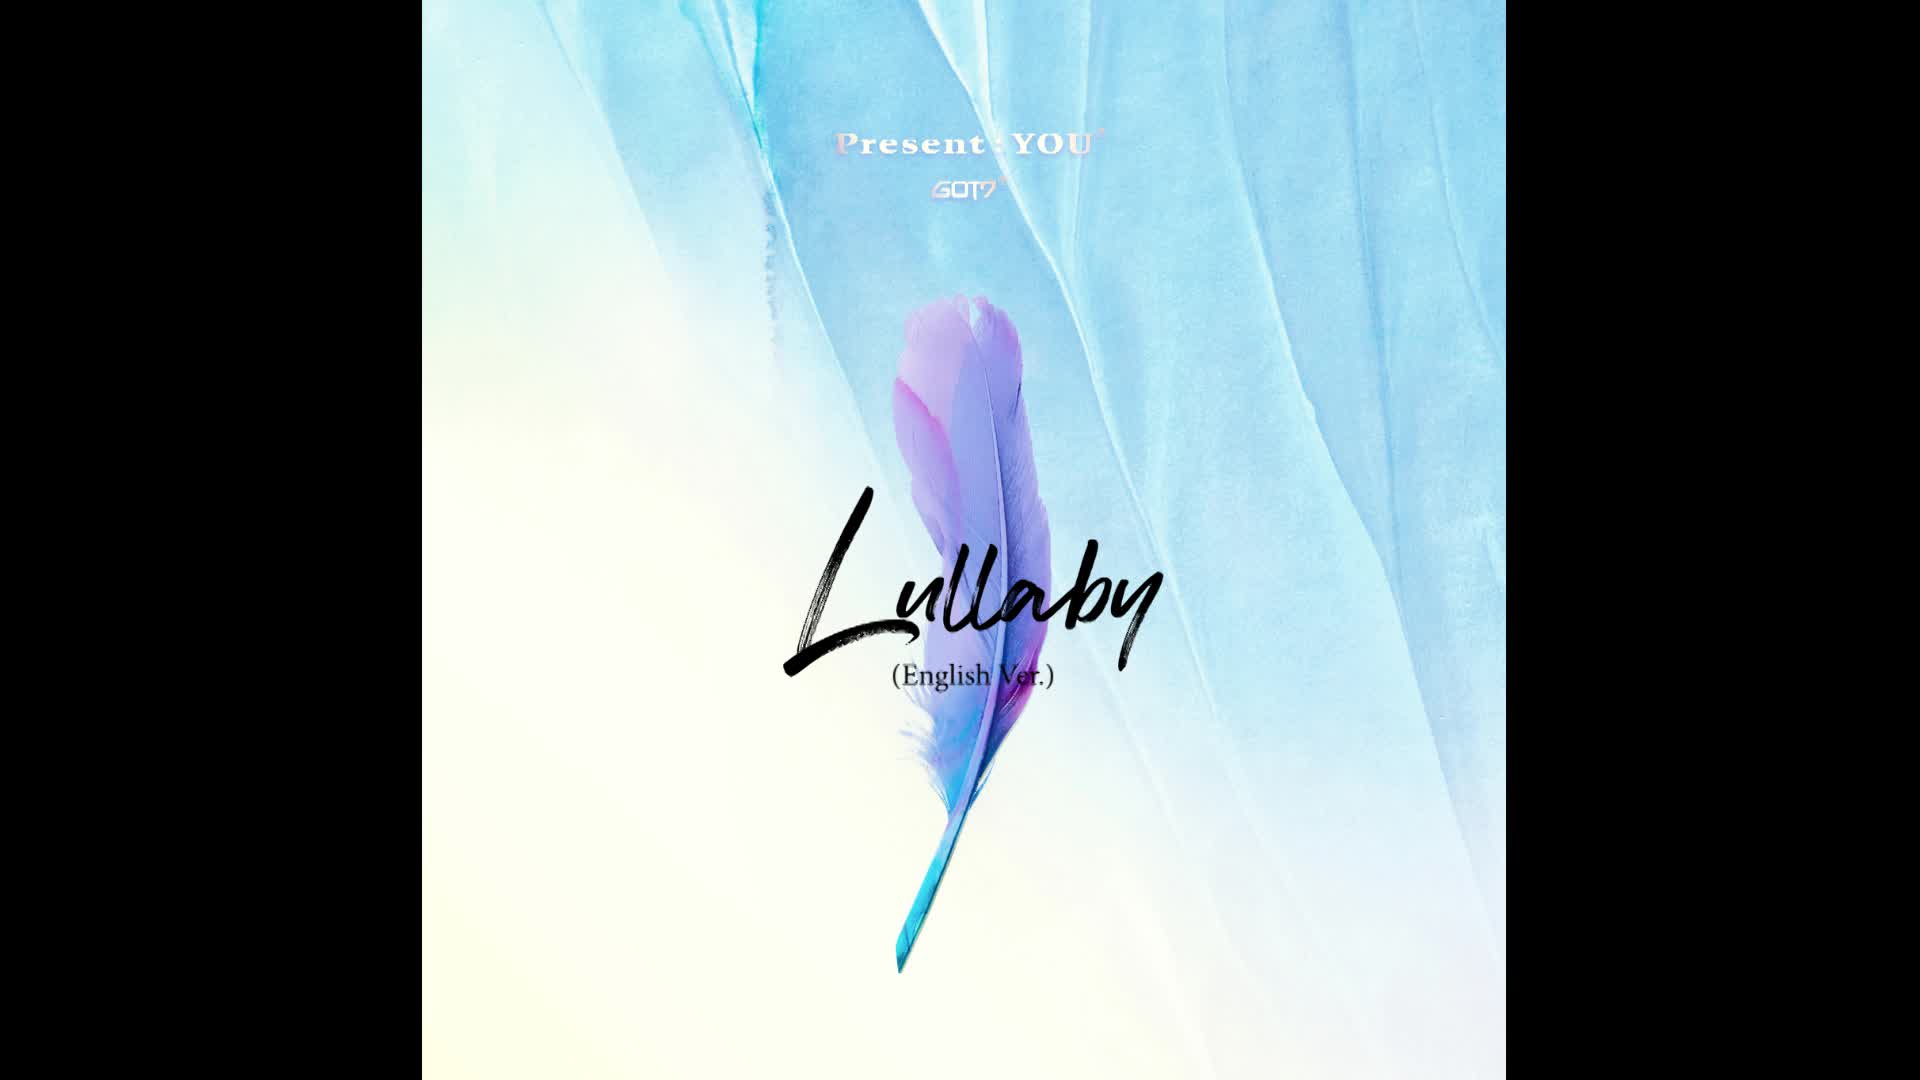 GOT7(갓세븐) "Lullaby" (English Ver.) Track Spoiler